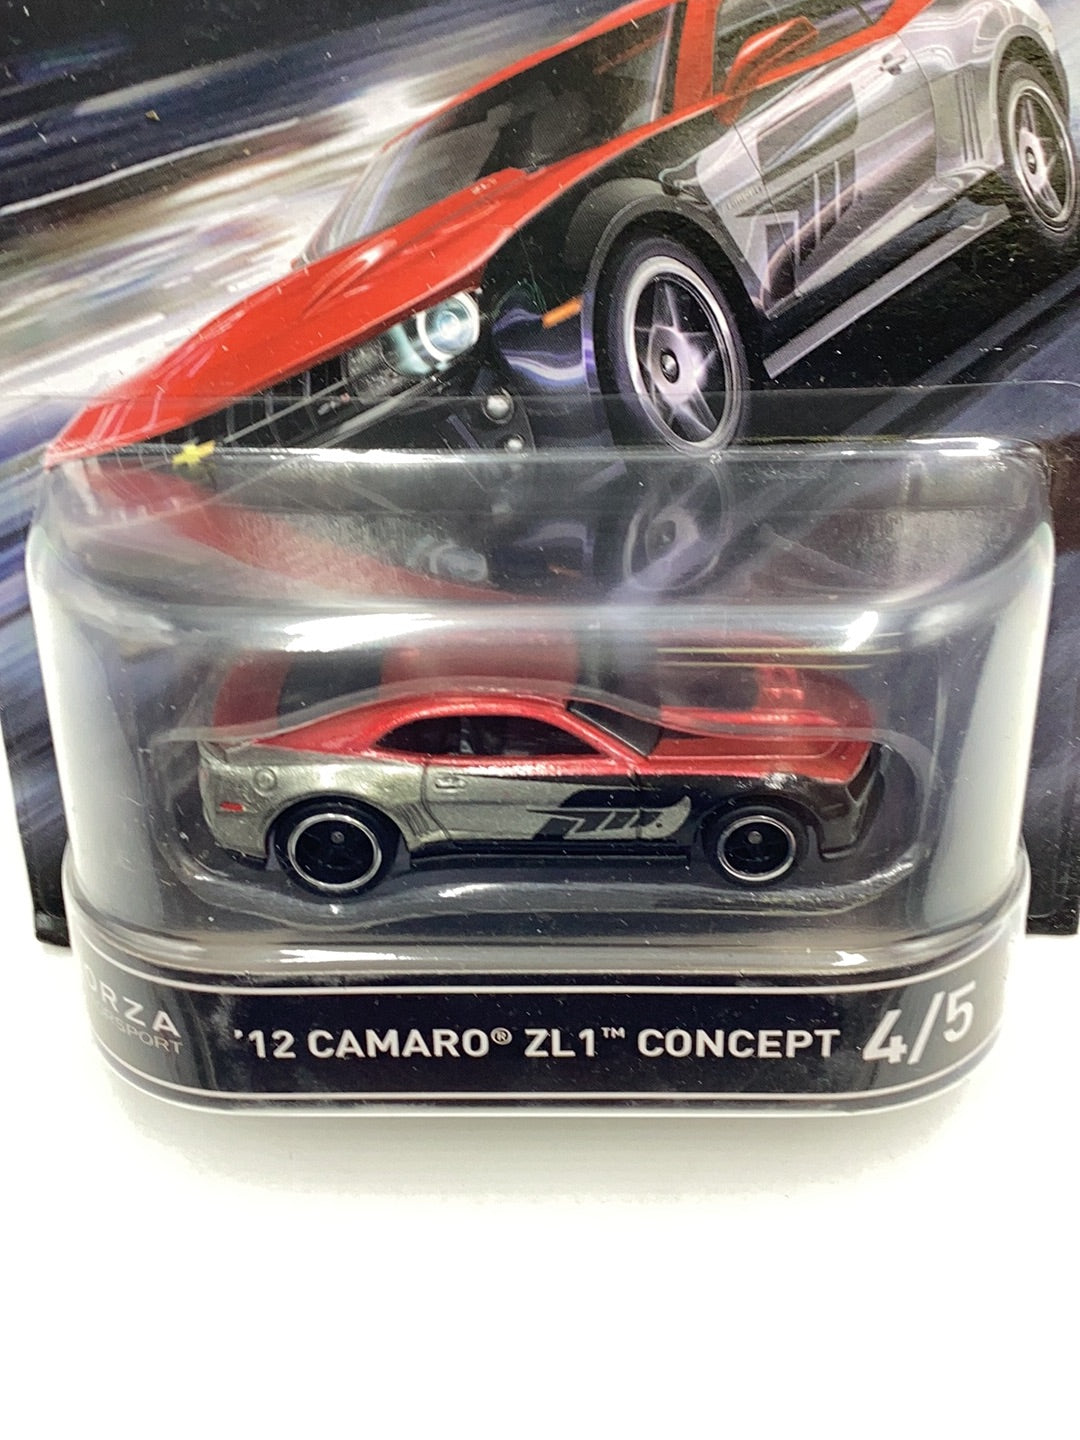 Hot wheels retro entertainment Forza Motorsport 12 Camaro ZL1 Concept 4/5 242B